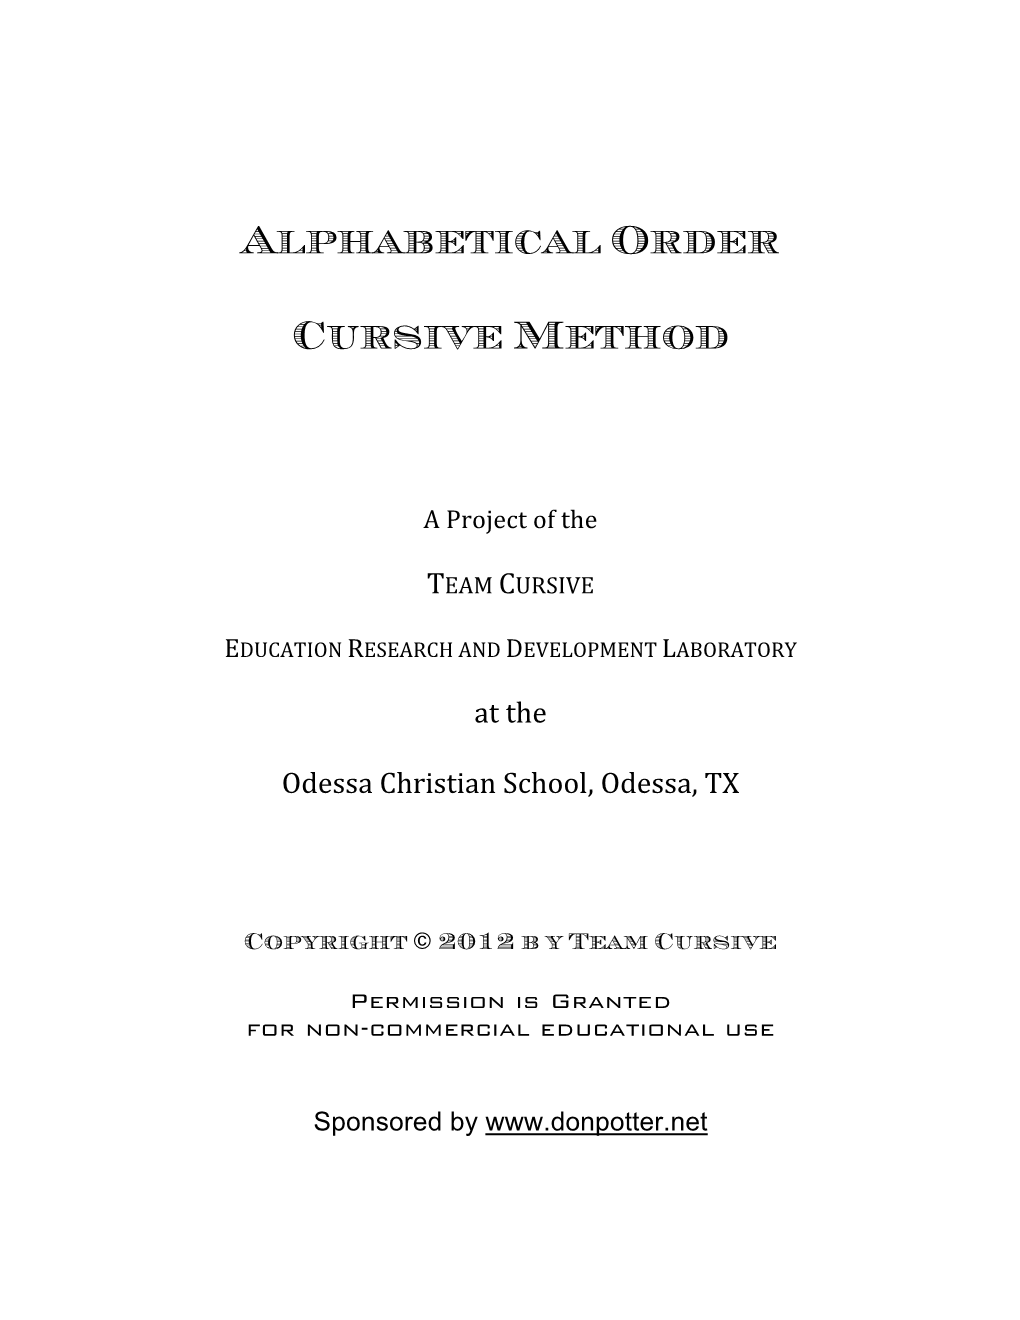 Alphabetical Order Cursive Method